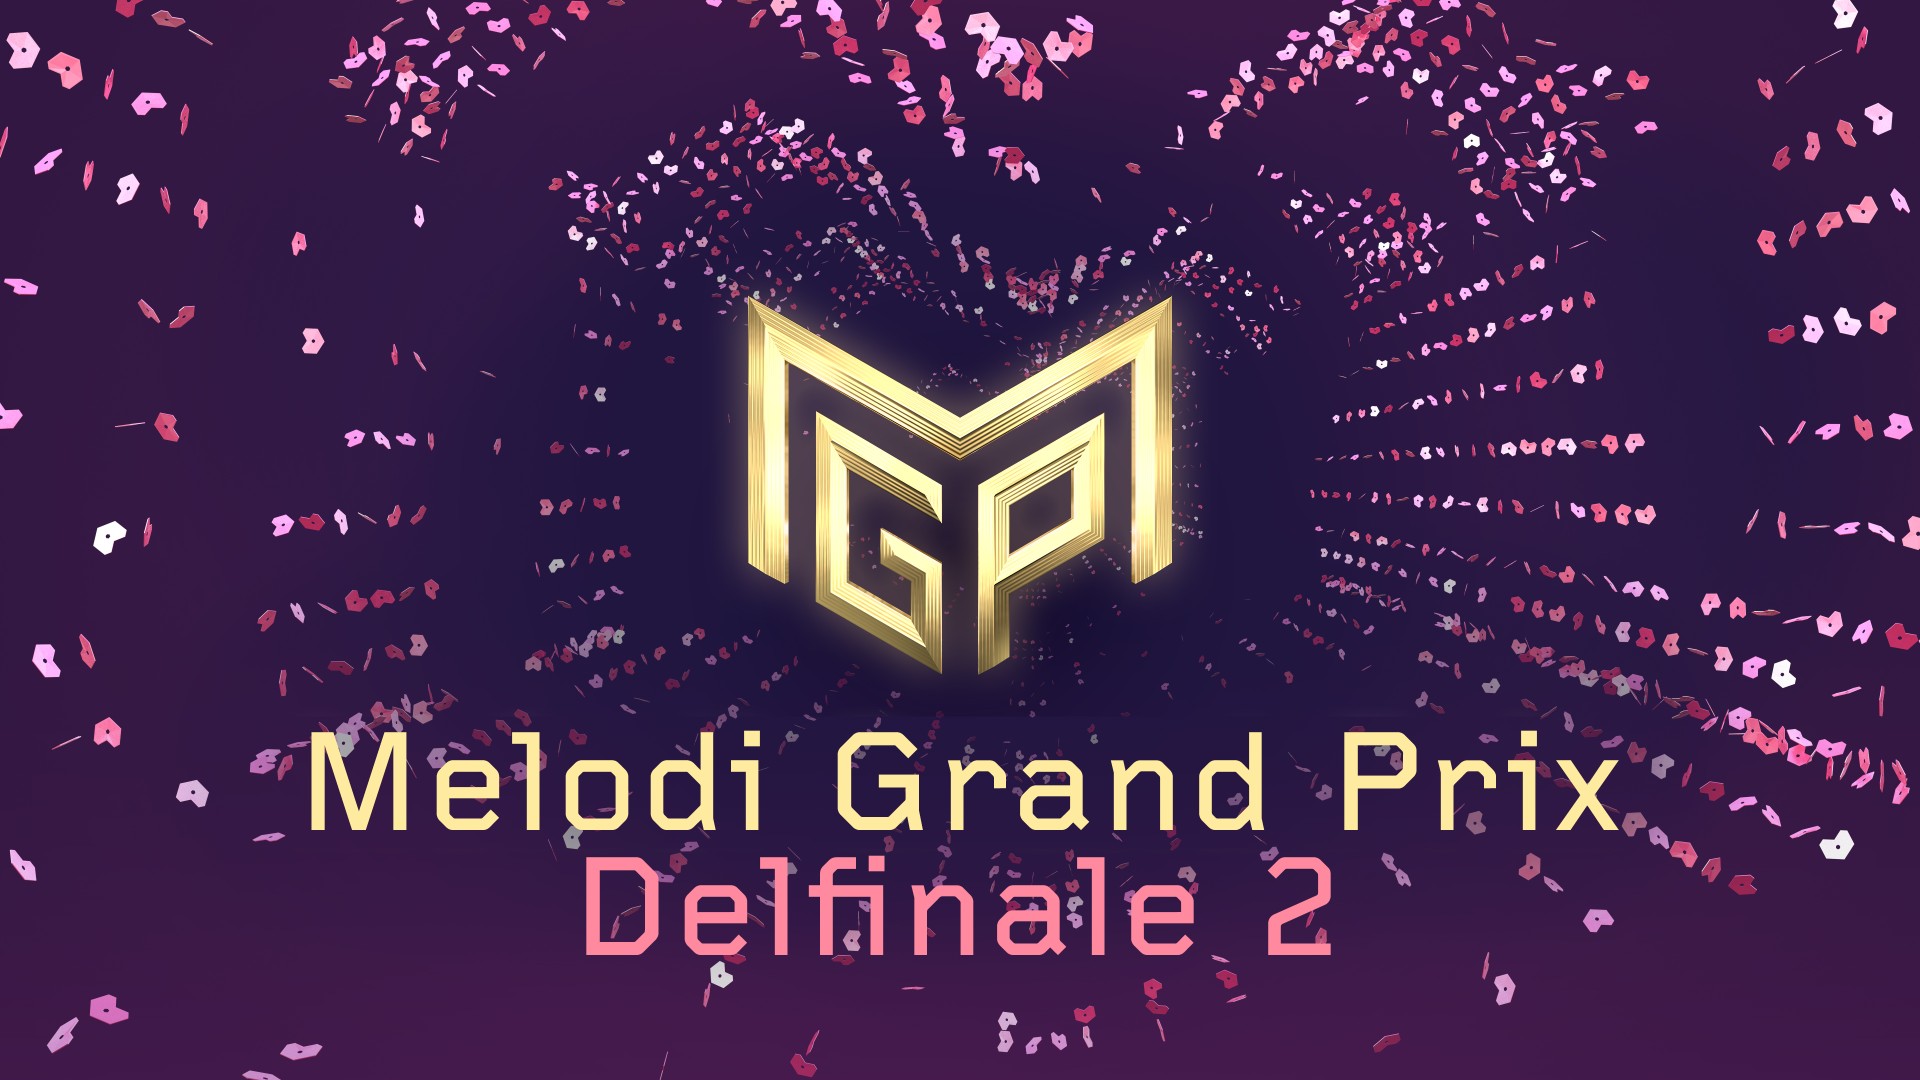 Melodi Grand Prix Melodi Grand Prix delfinale 2 NRK TV